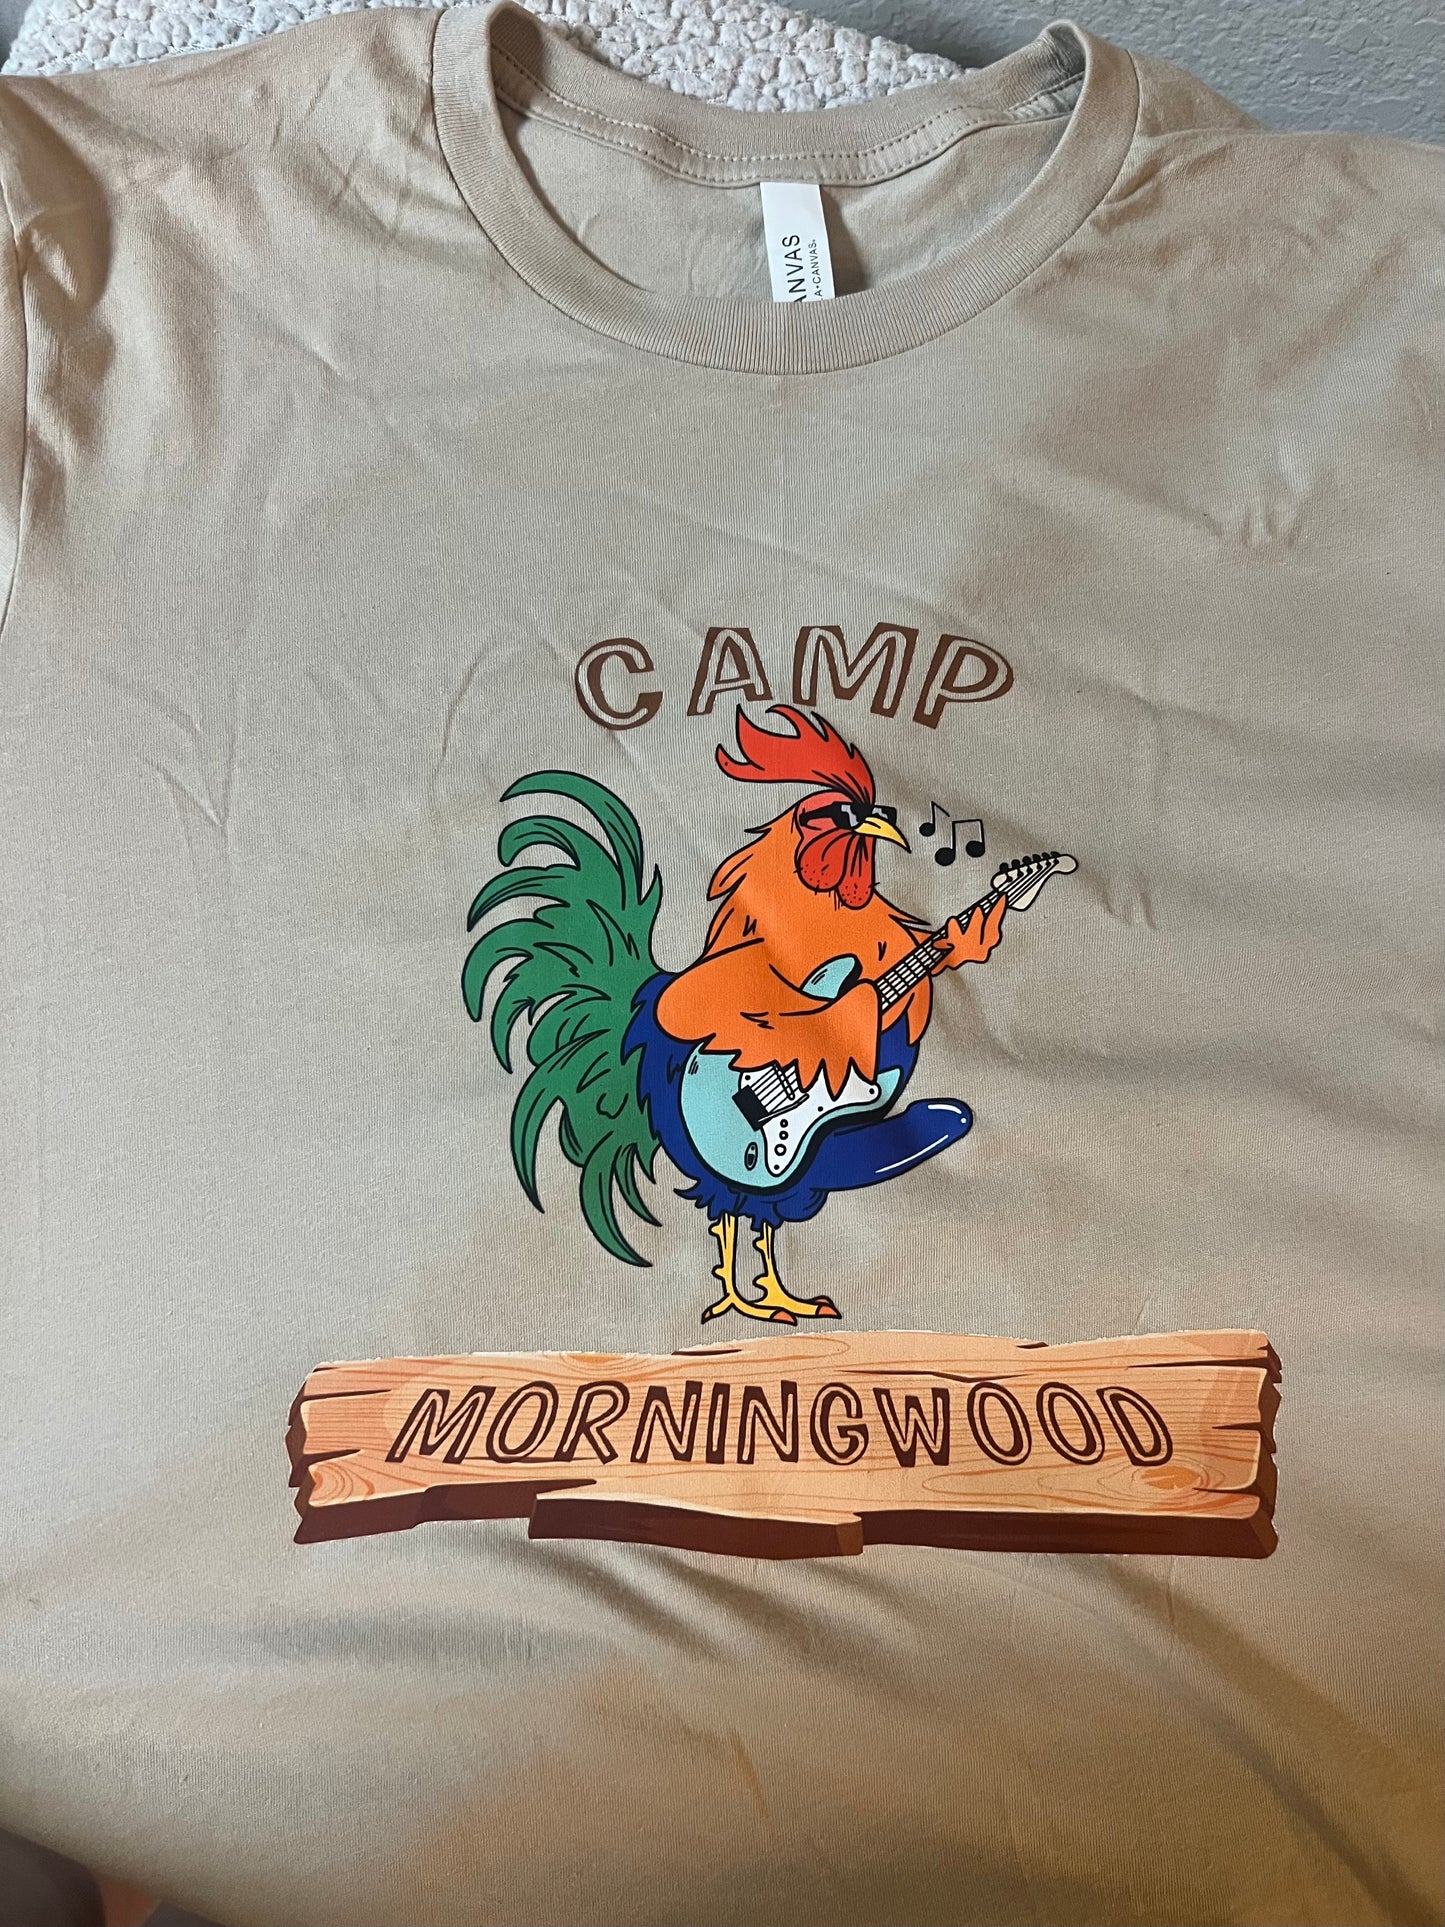 Camp Morningwood Rocklahoma Shirt